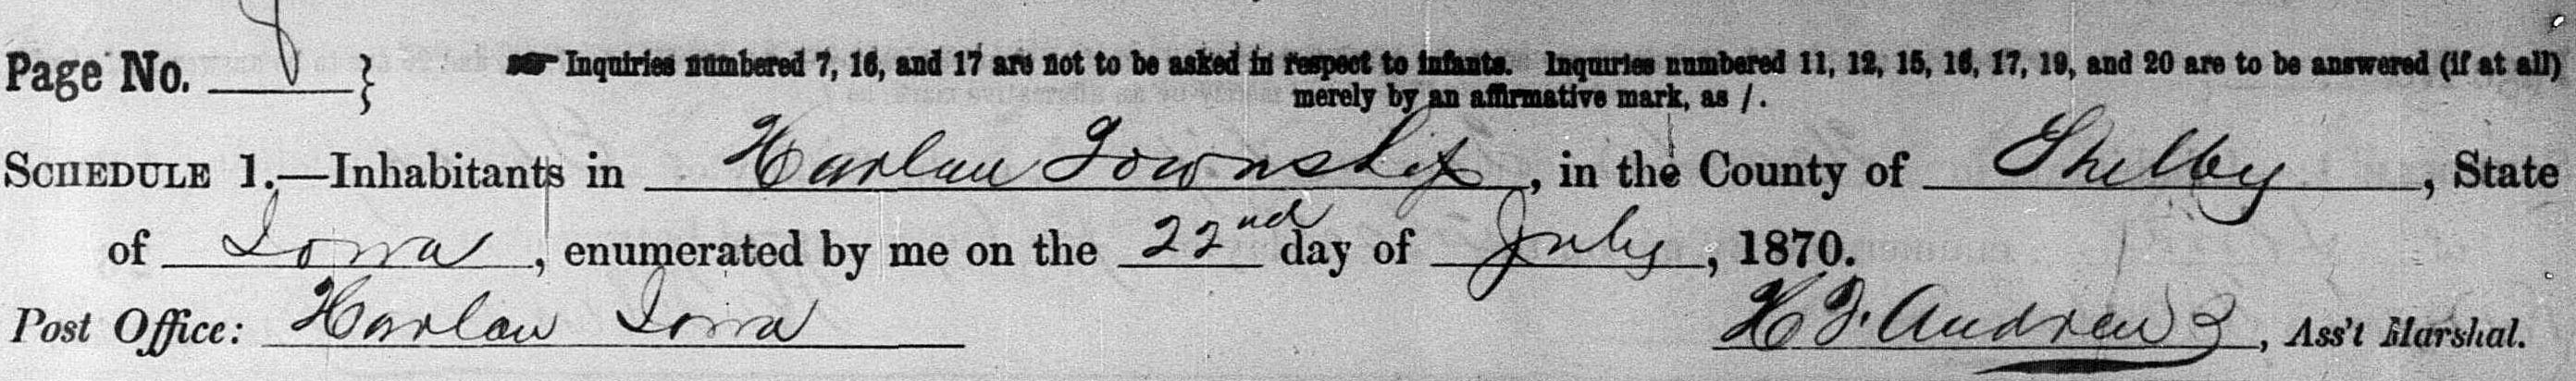 Chatburn Census 1870, Harlan Twp., Shelby Co., Iowa